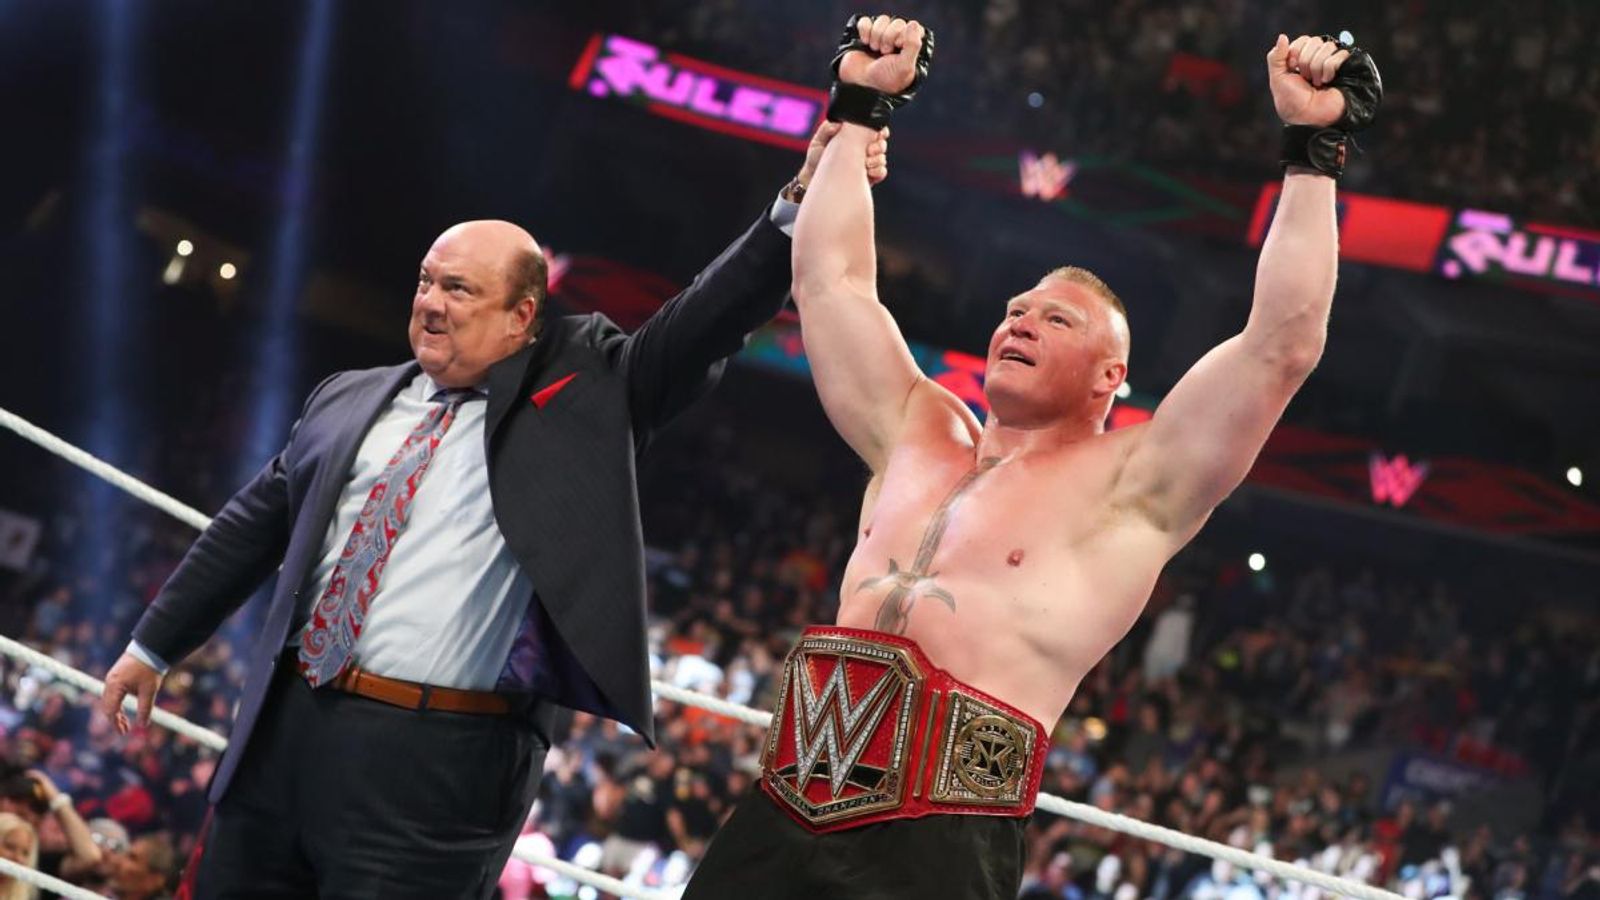 Wwe Raw New Era Of Brock Lesnar As Universal Champion Begins Wwe News Sky Sports